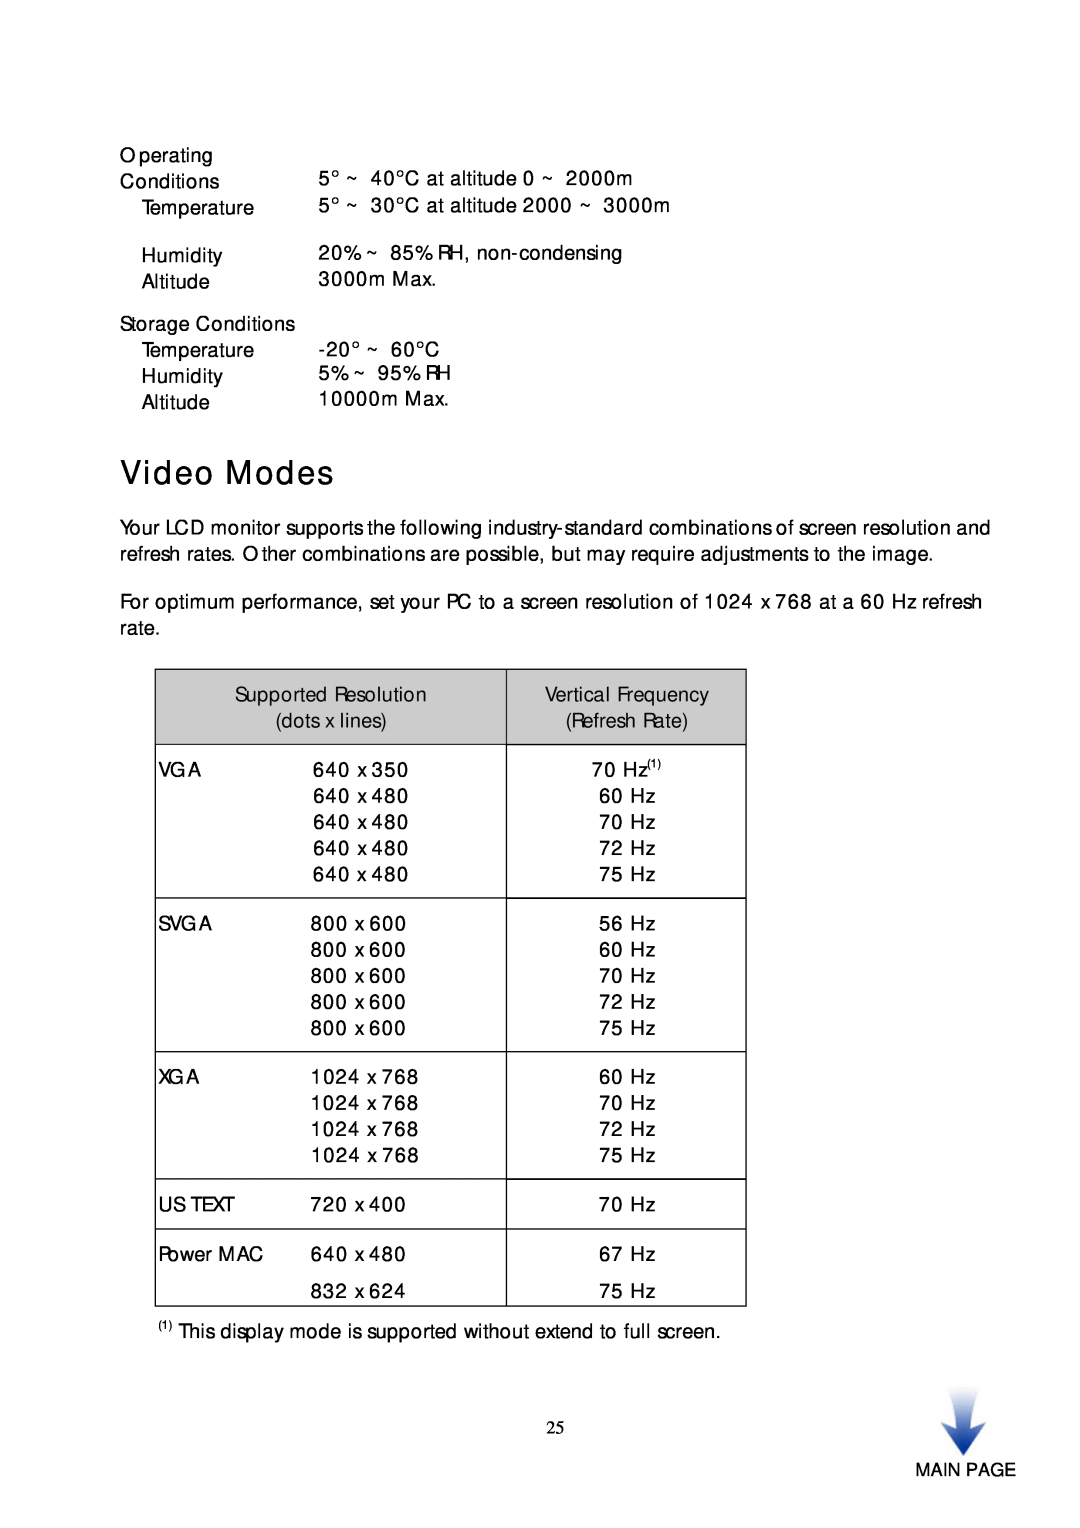 HP vf51 15 inch manual Video Modes, 70 Hz 